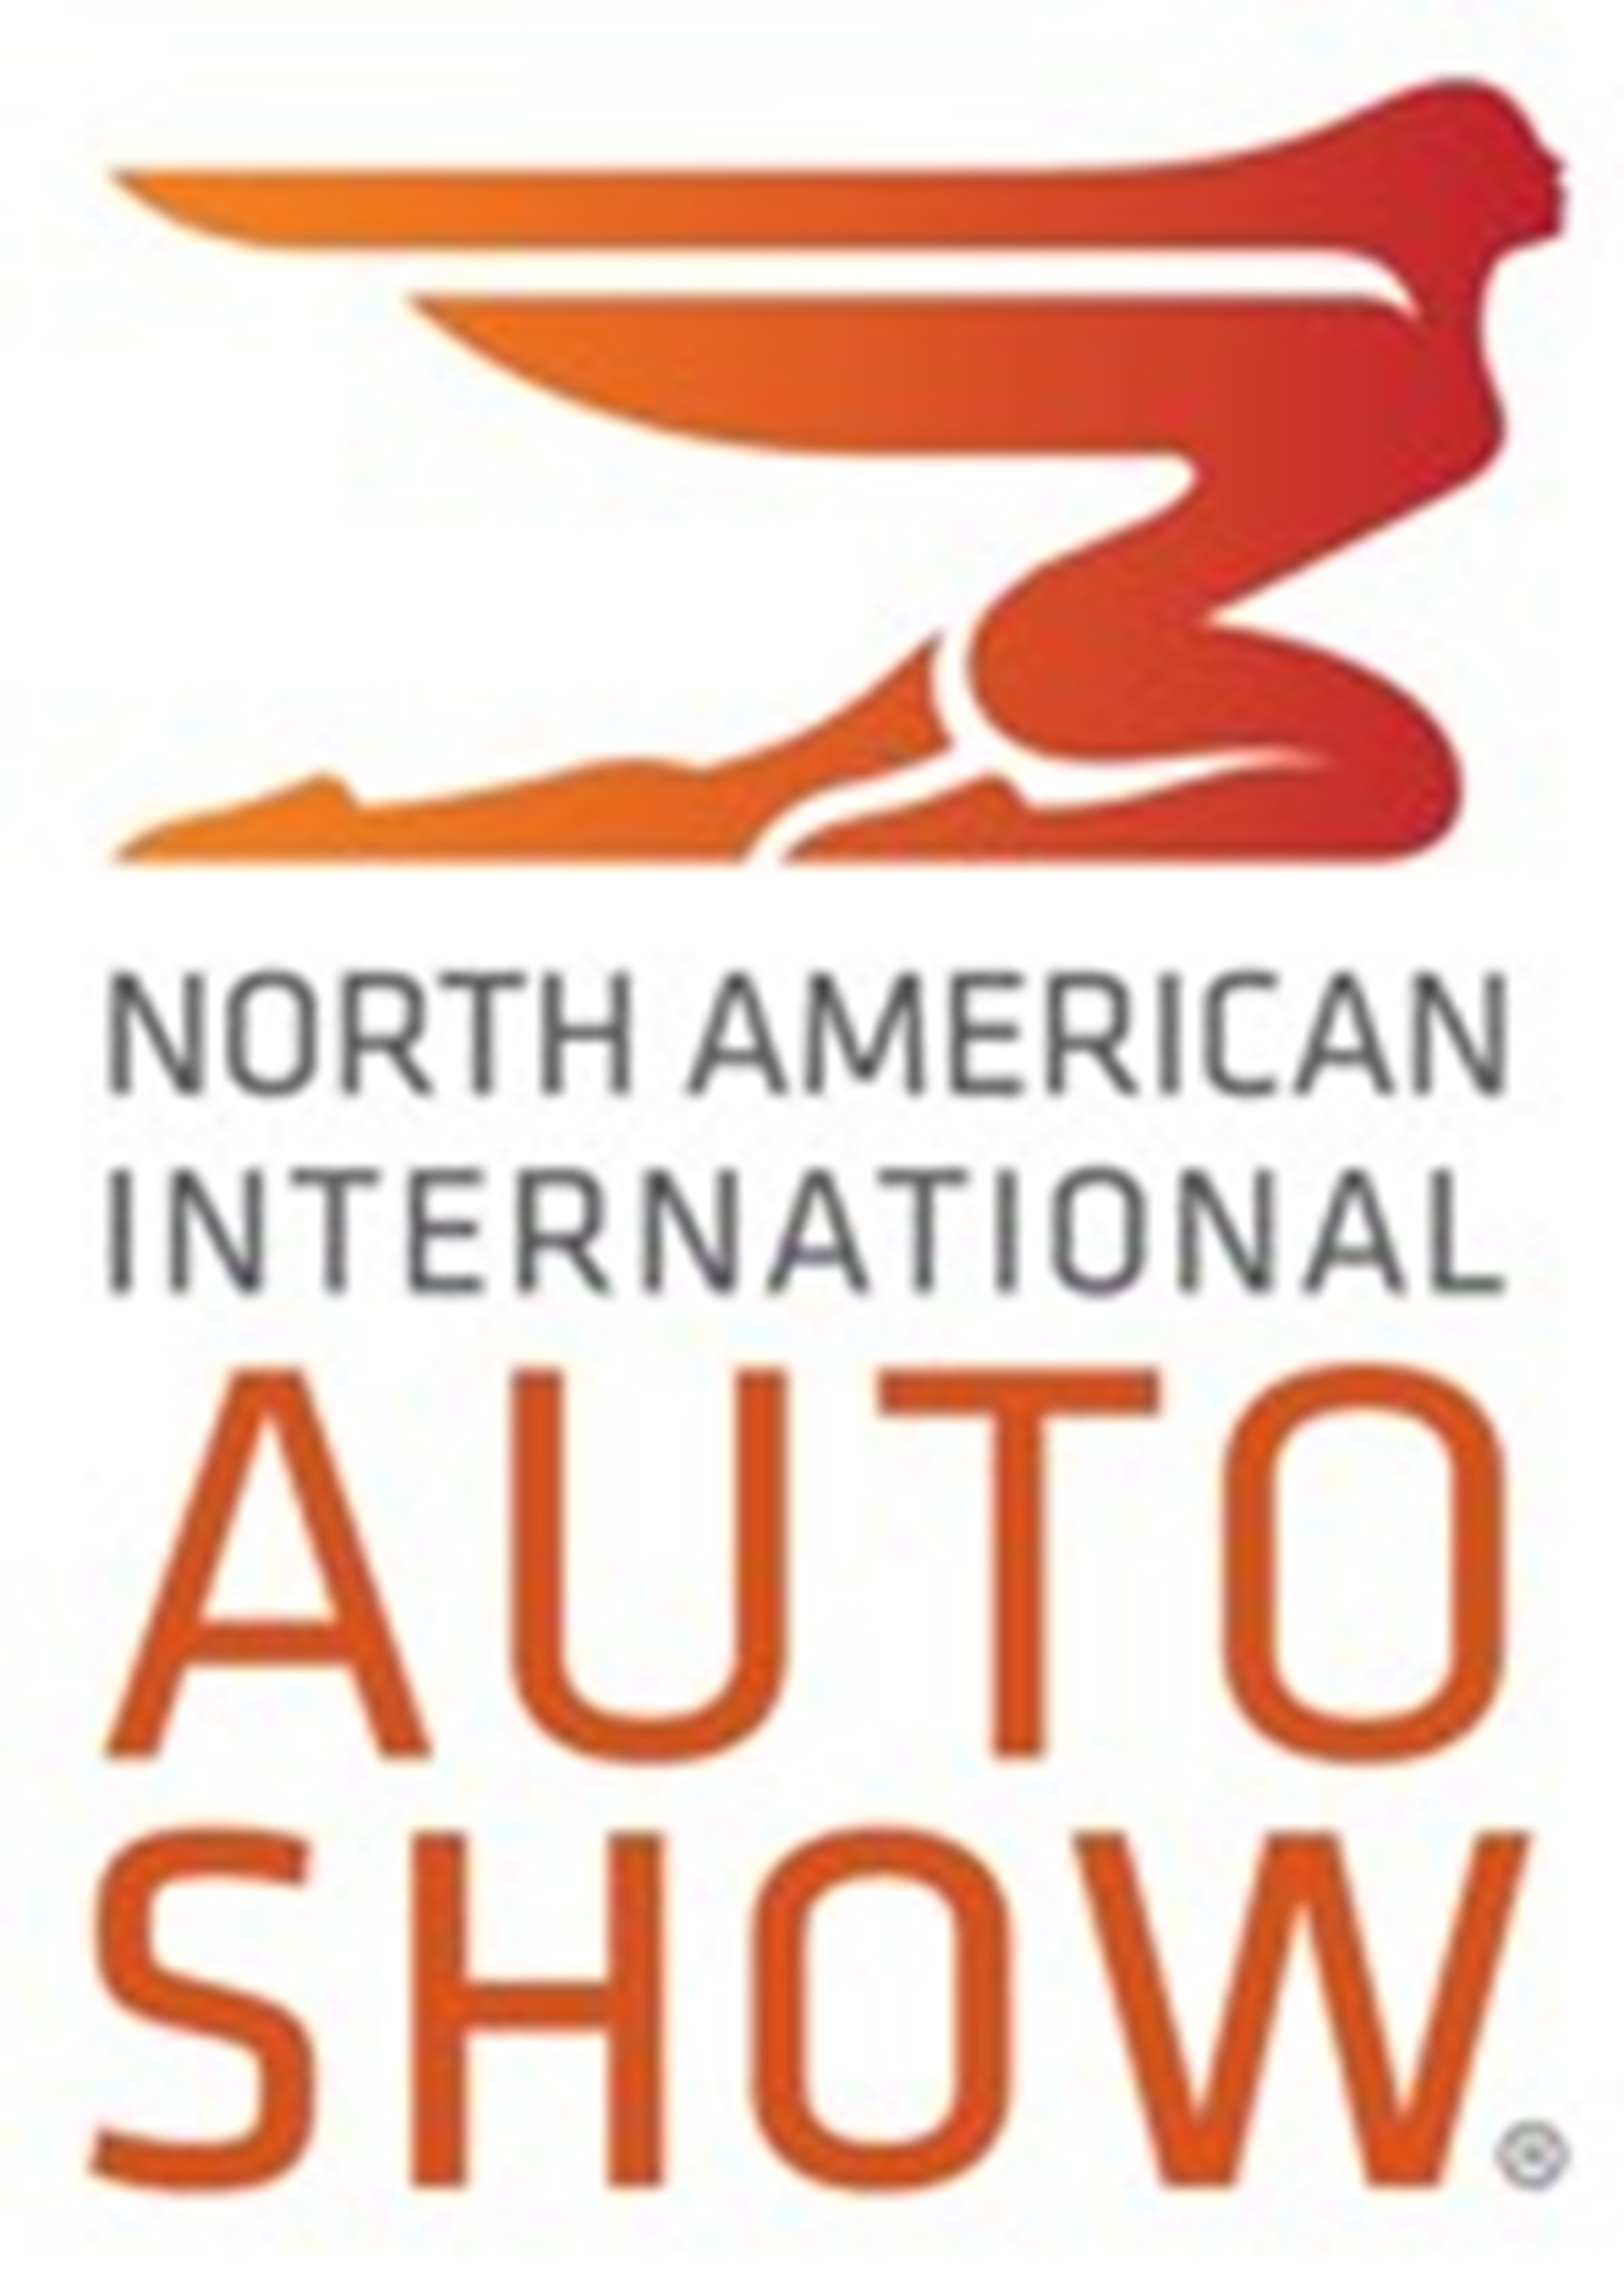 Auto Expo 2012 India and NAIAS 2012 USA